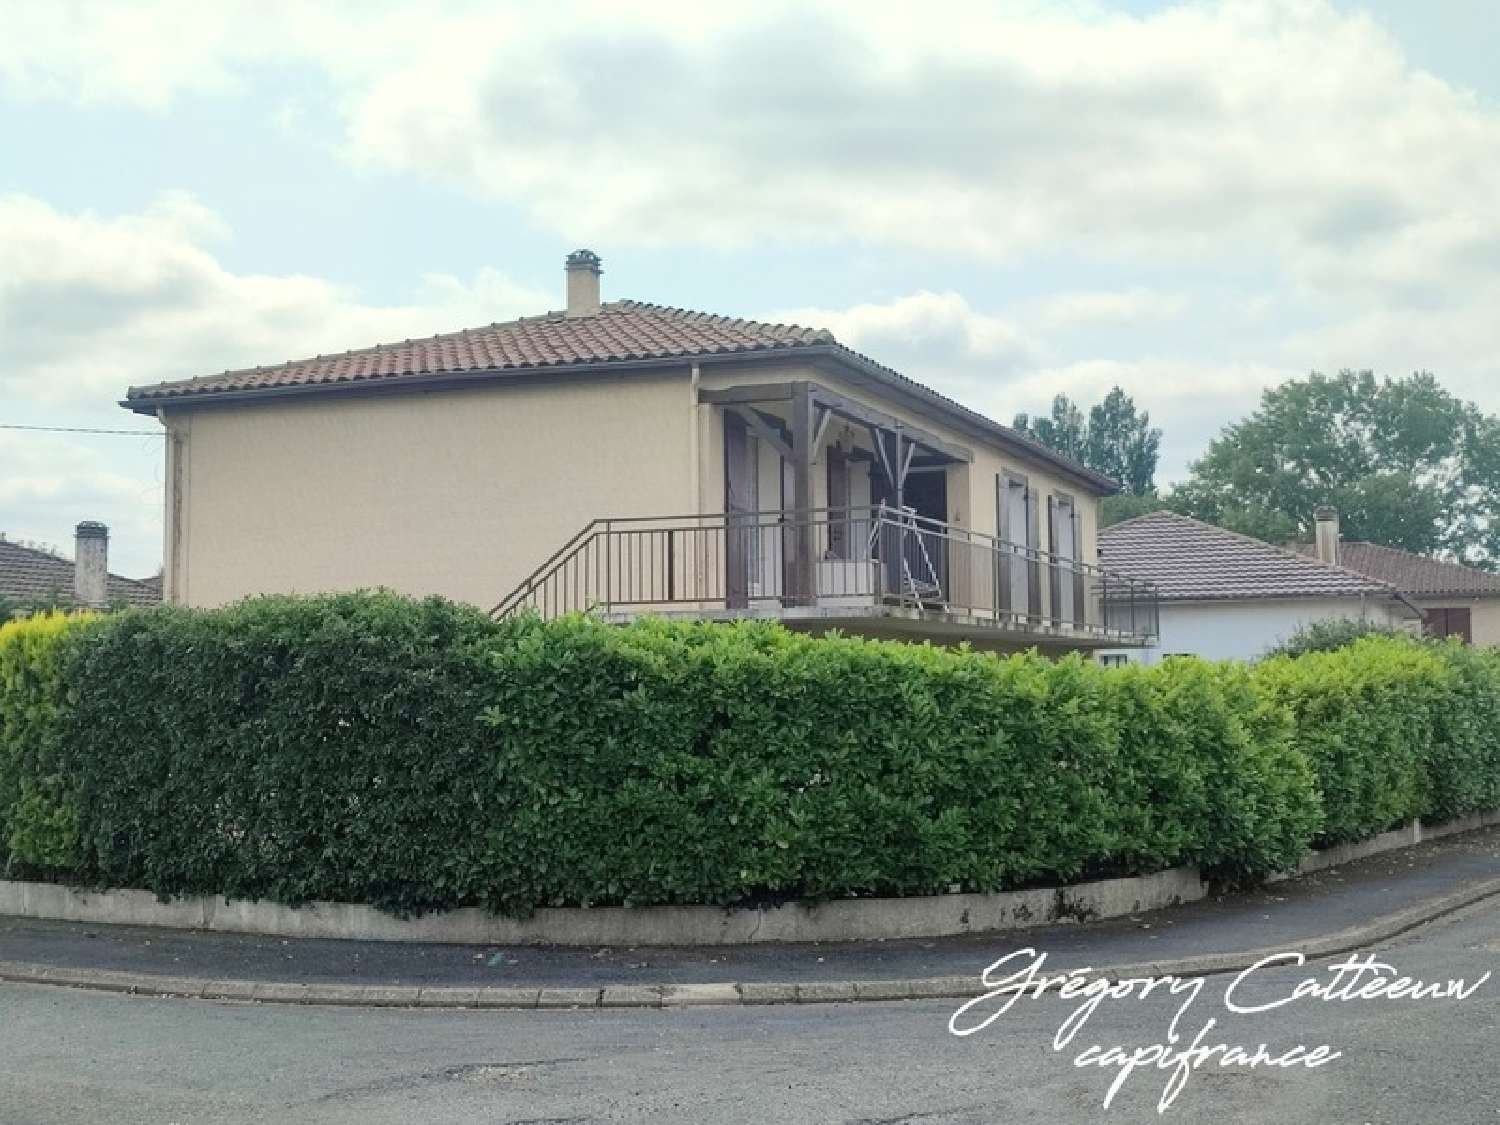  à vendre maison Bergerac Dordogne 2